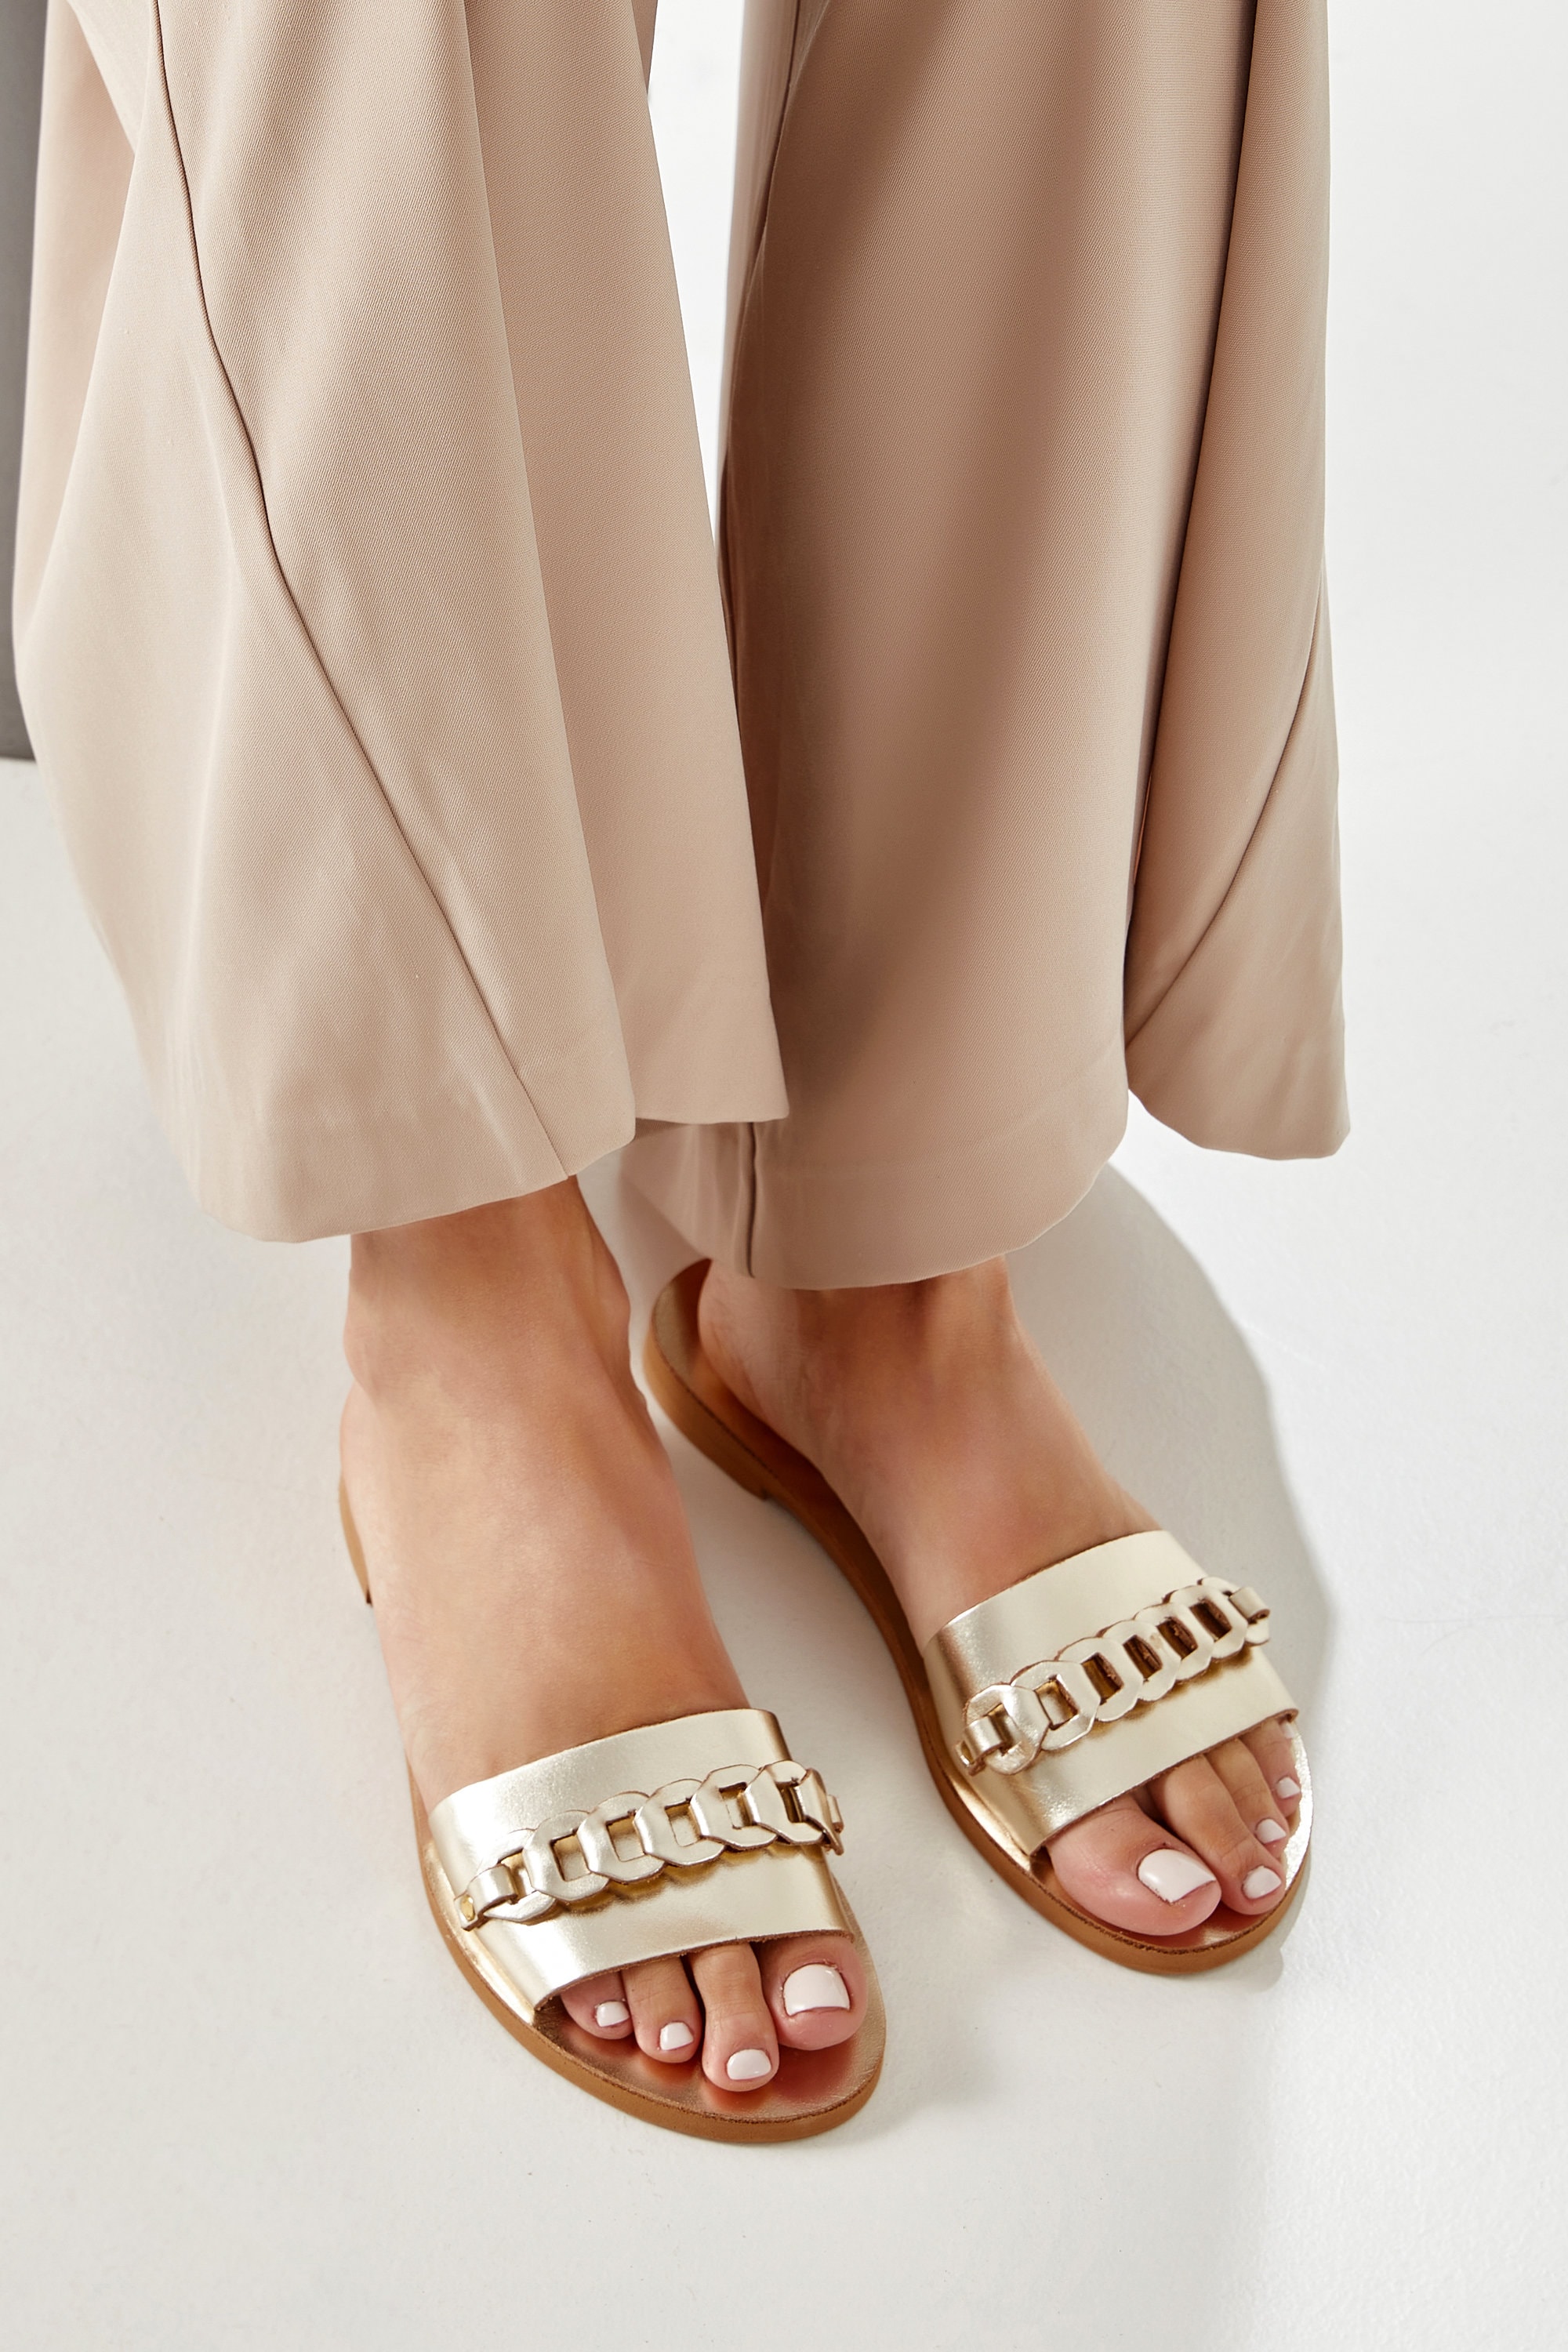 Leather Sandals Women, Greek Sandals, Gold Slide Sandals, Metallic Flat Shoes, Gold Summer Shoes, Ekavi Design